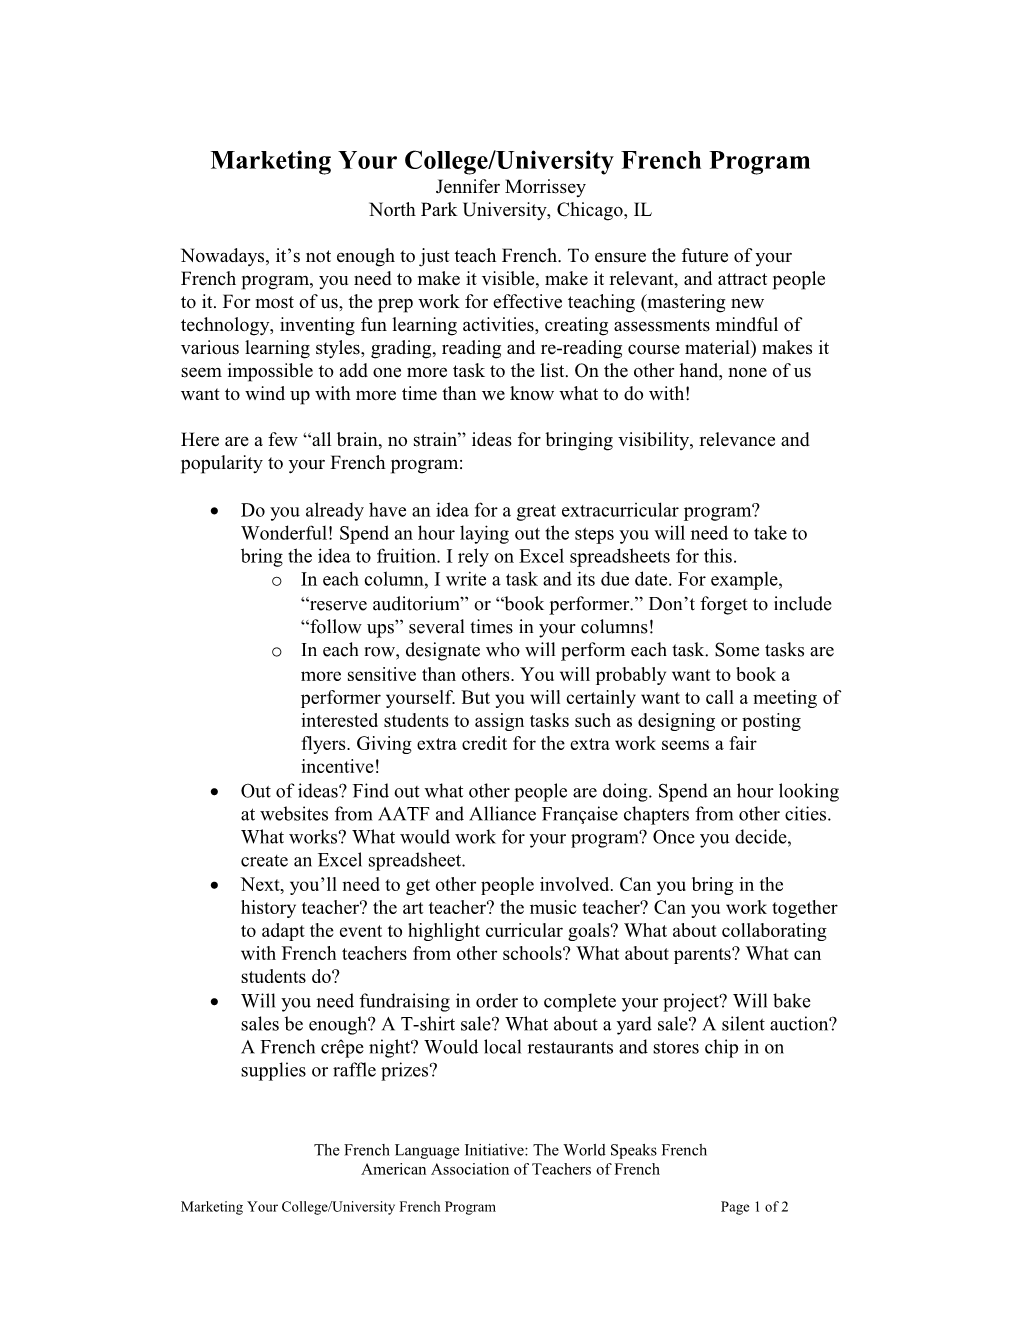 Marketing Your French Program